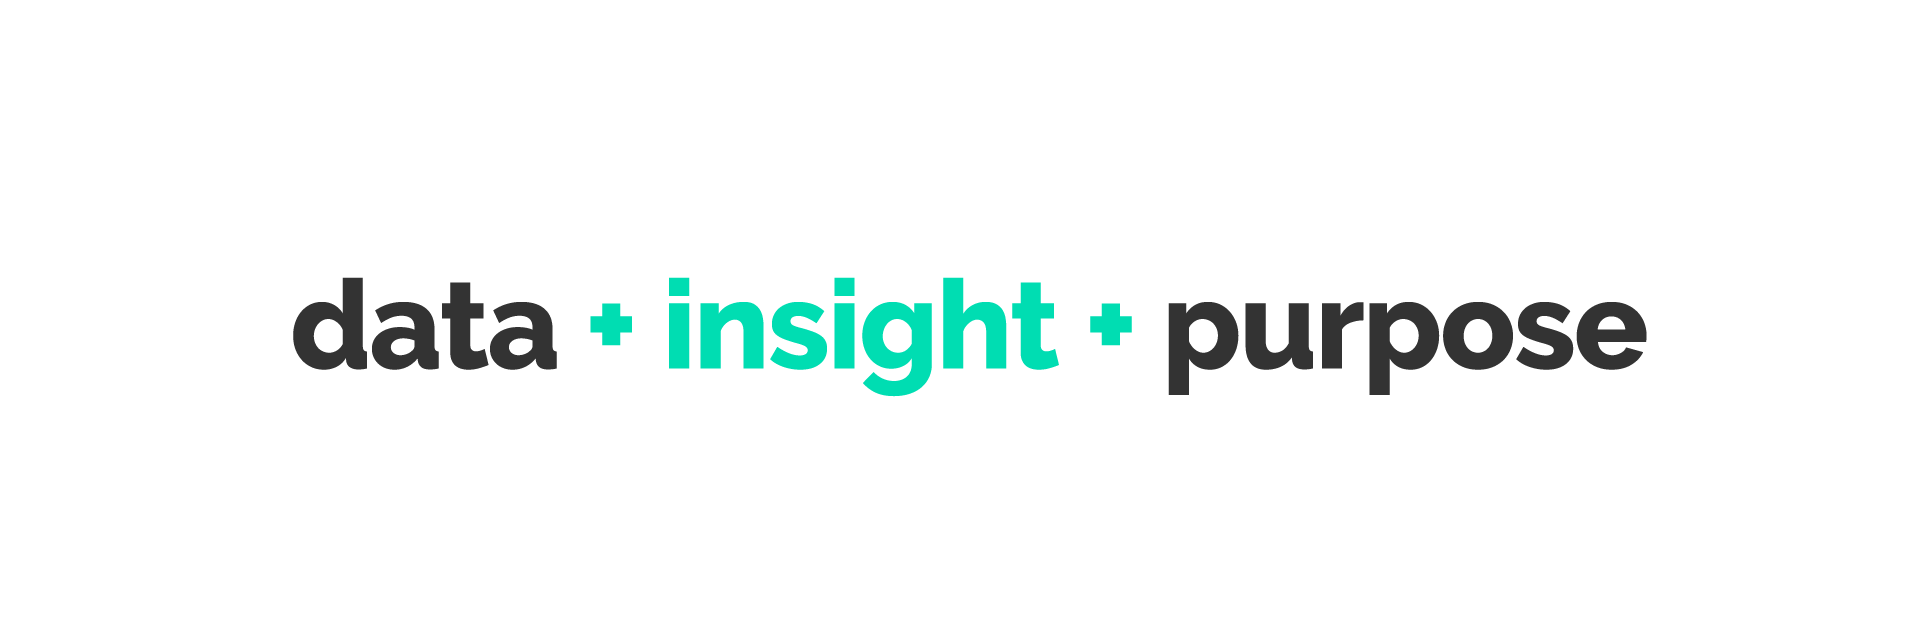 data+insight+purpose